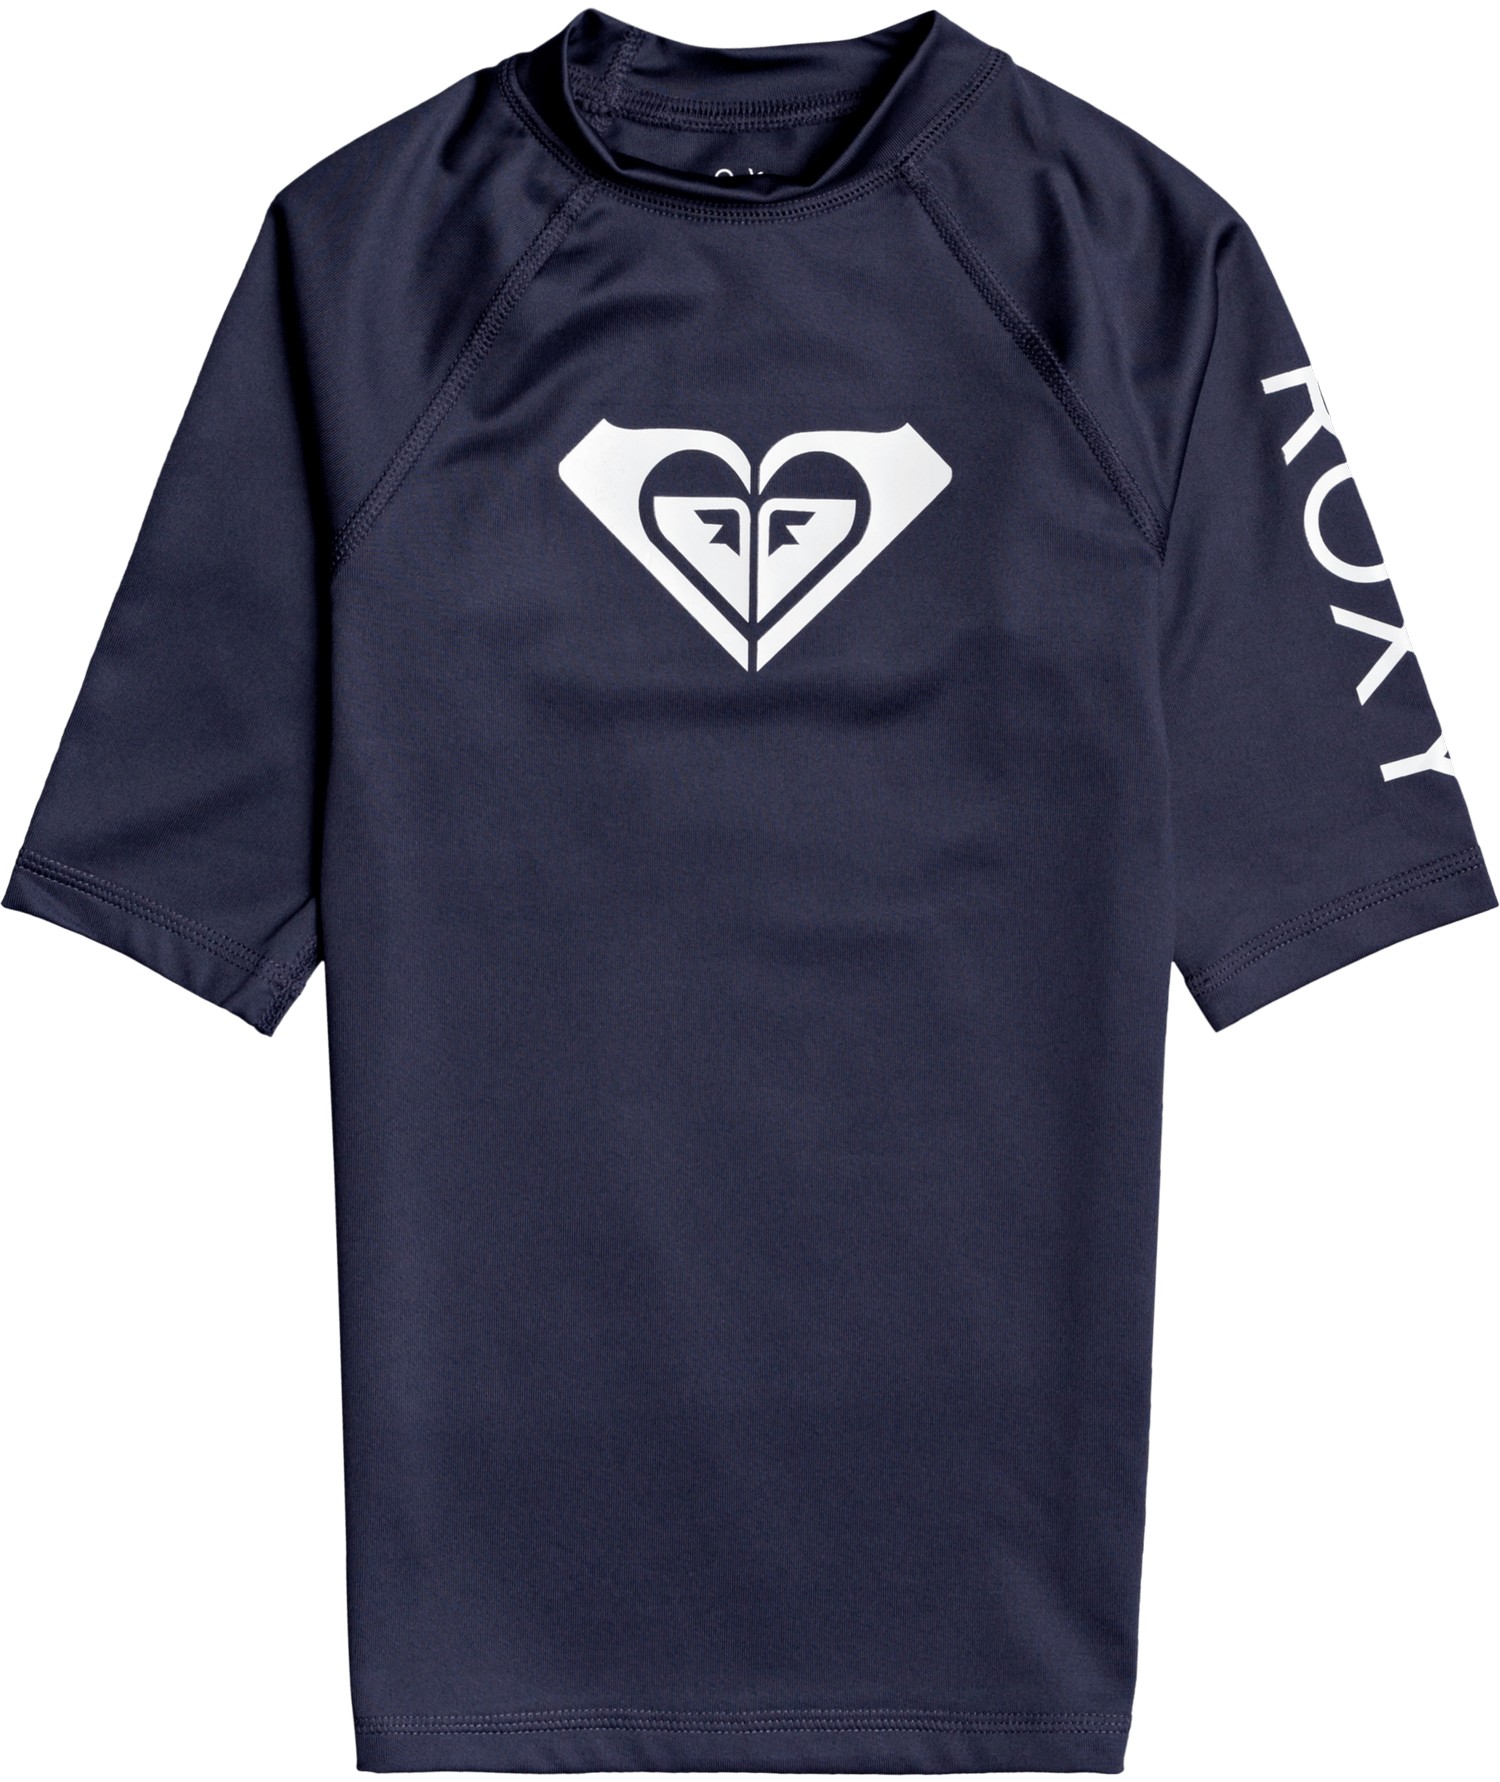 Roxy - UV Swim shirt for teen girls - Whole Hearted - Mood Indigo